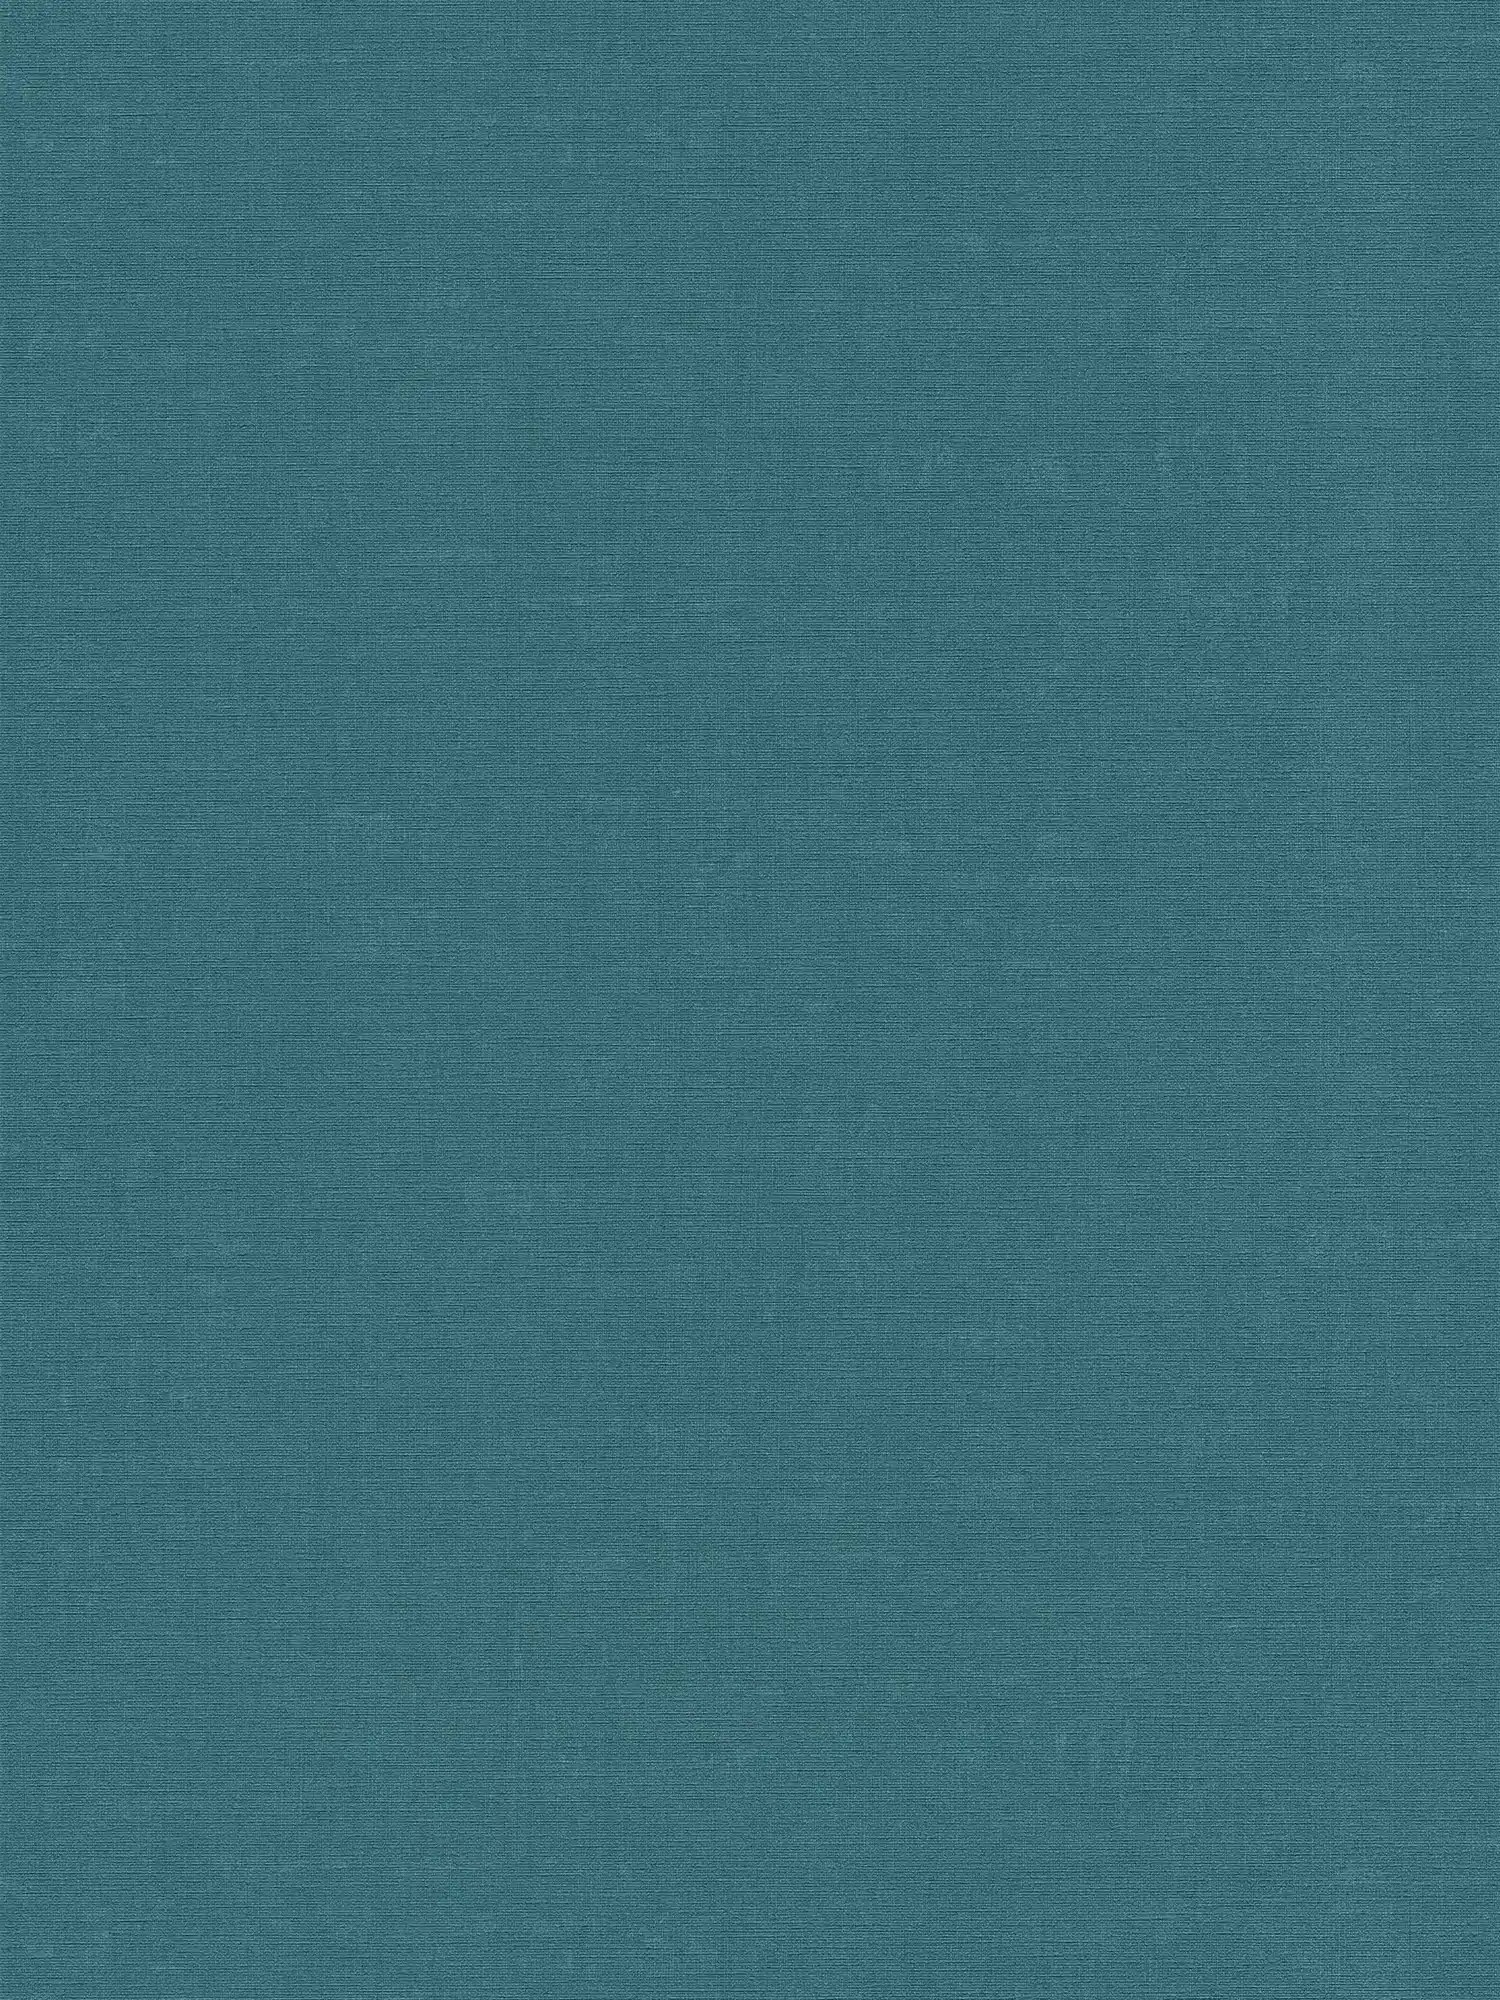 Non-woven wallpaper plain with mottled effect - blue, green
